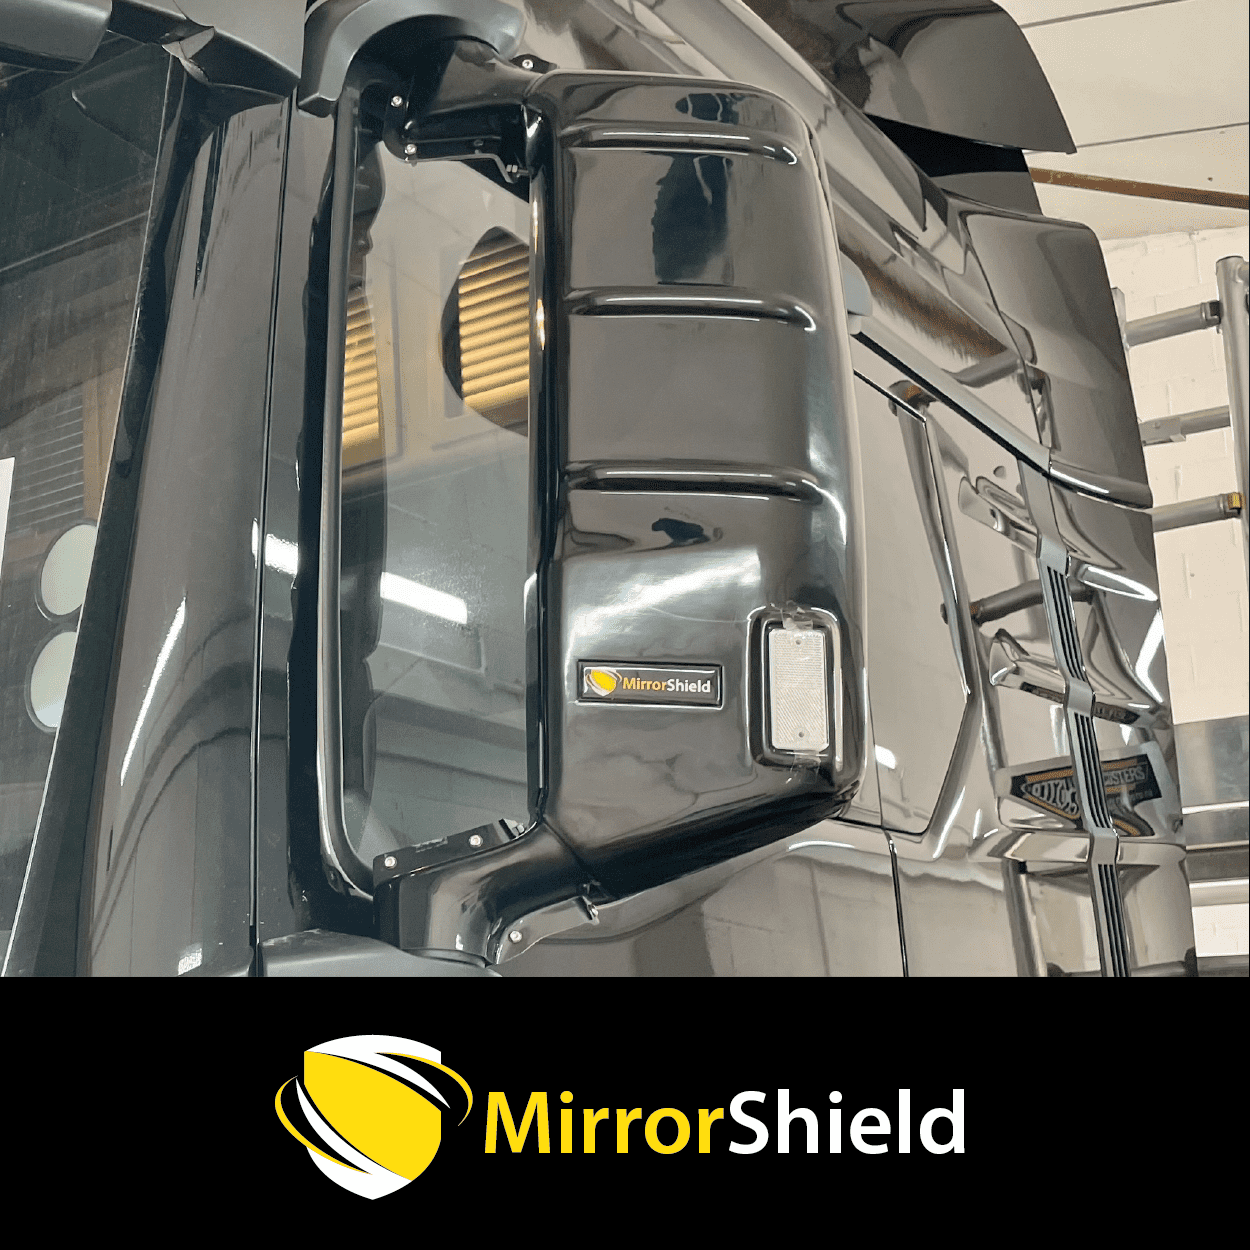 MAN TG3 TGX GX/GM/GN Wide Cab 2020 on MirrorShield - Super Strong Mirror Guard / Protector (Pair)